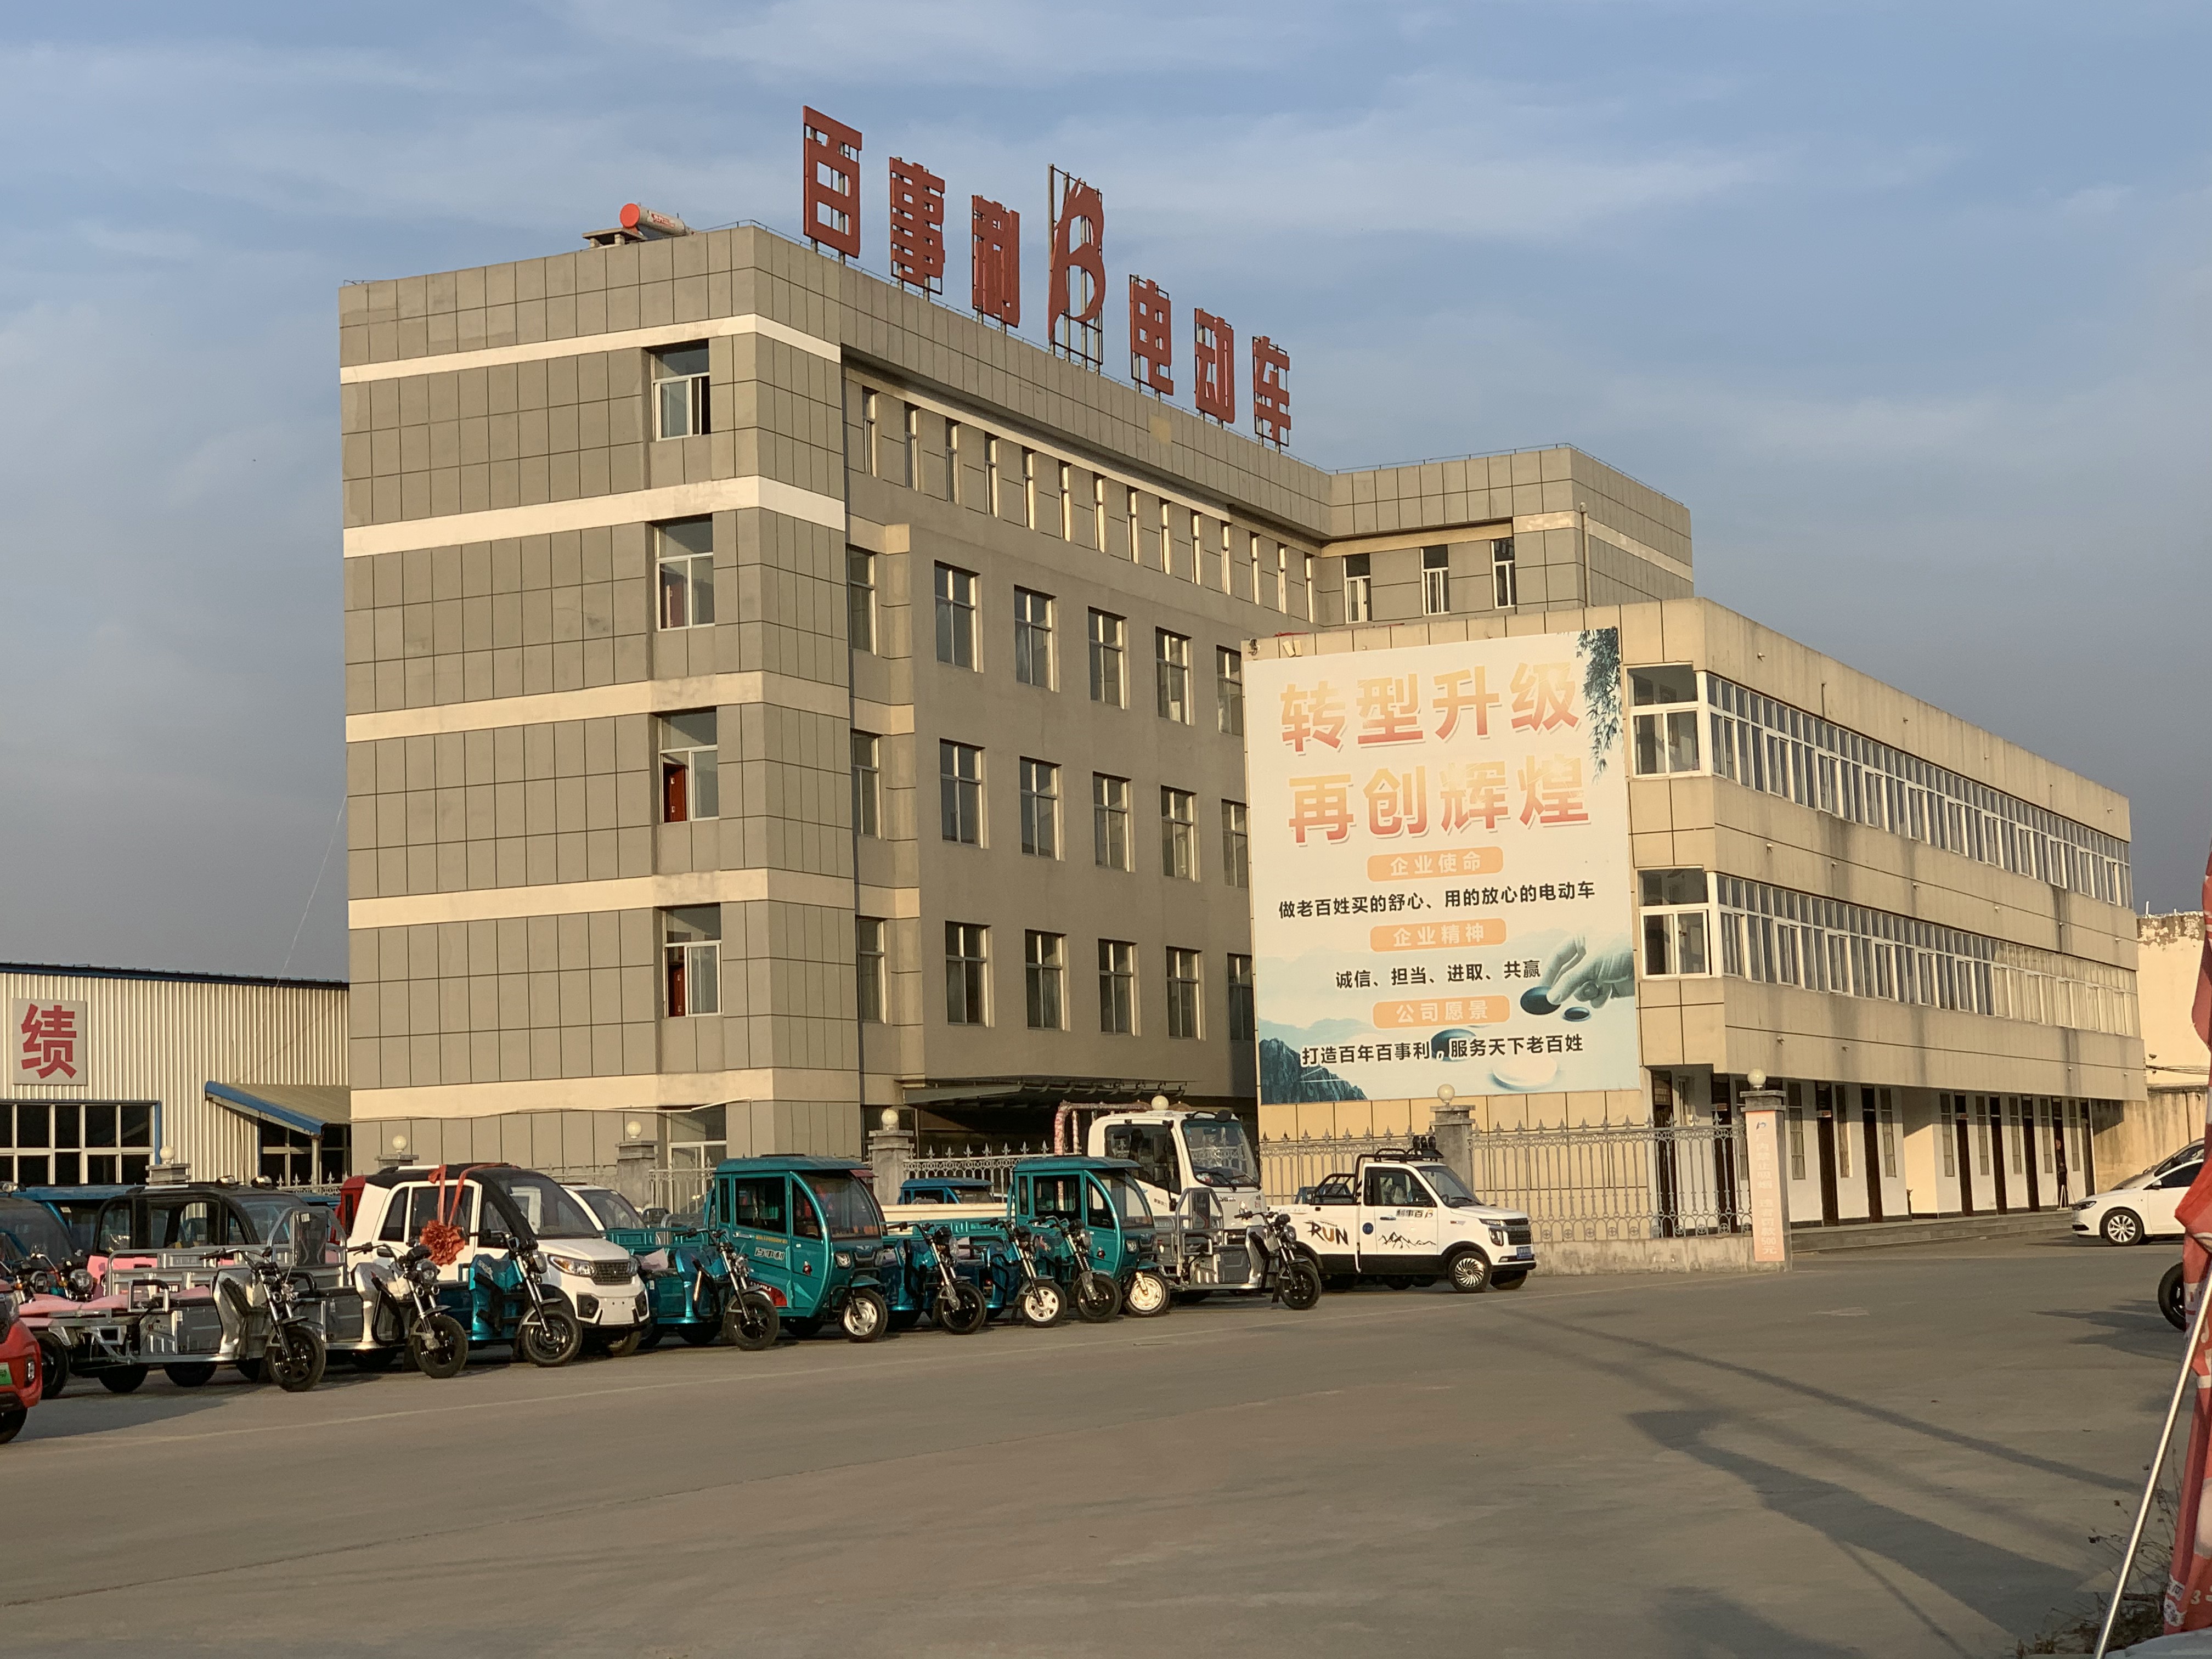 Furinkaevcar factory area in china